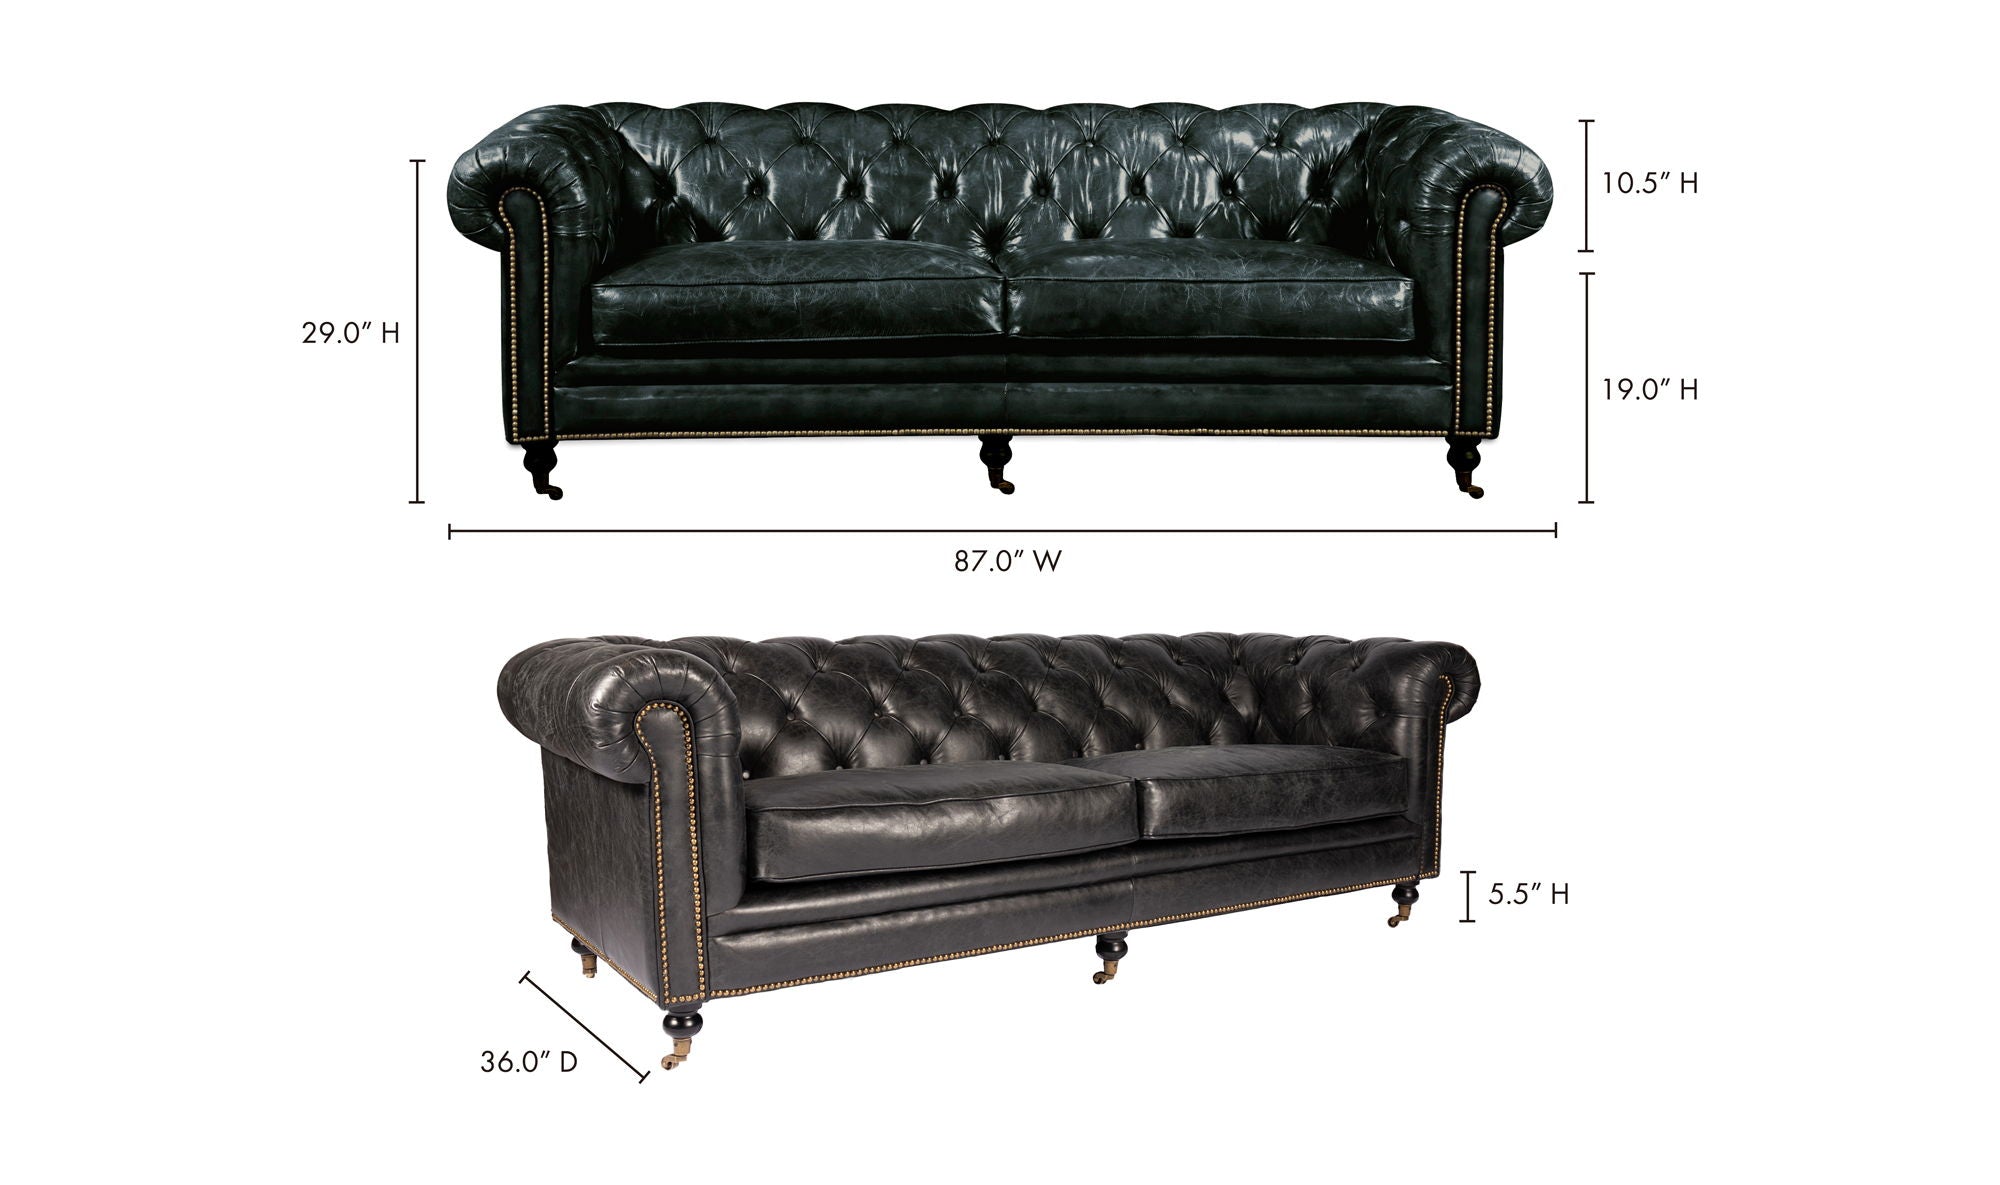 Birmingham Sofa - Black Top Grain Leather - Stylish Living Room Furniture